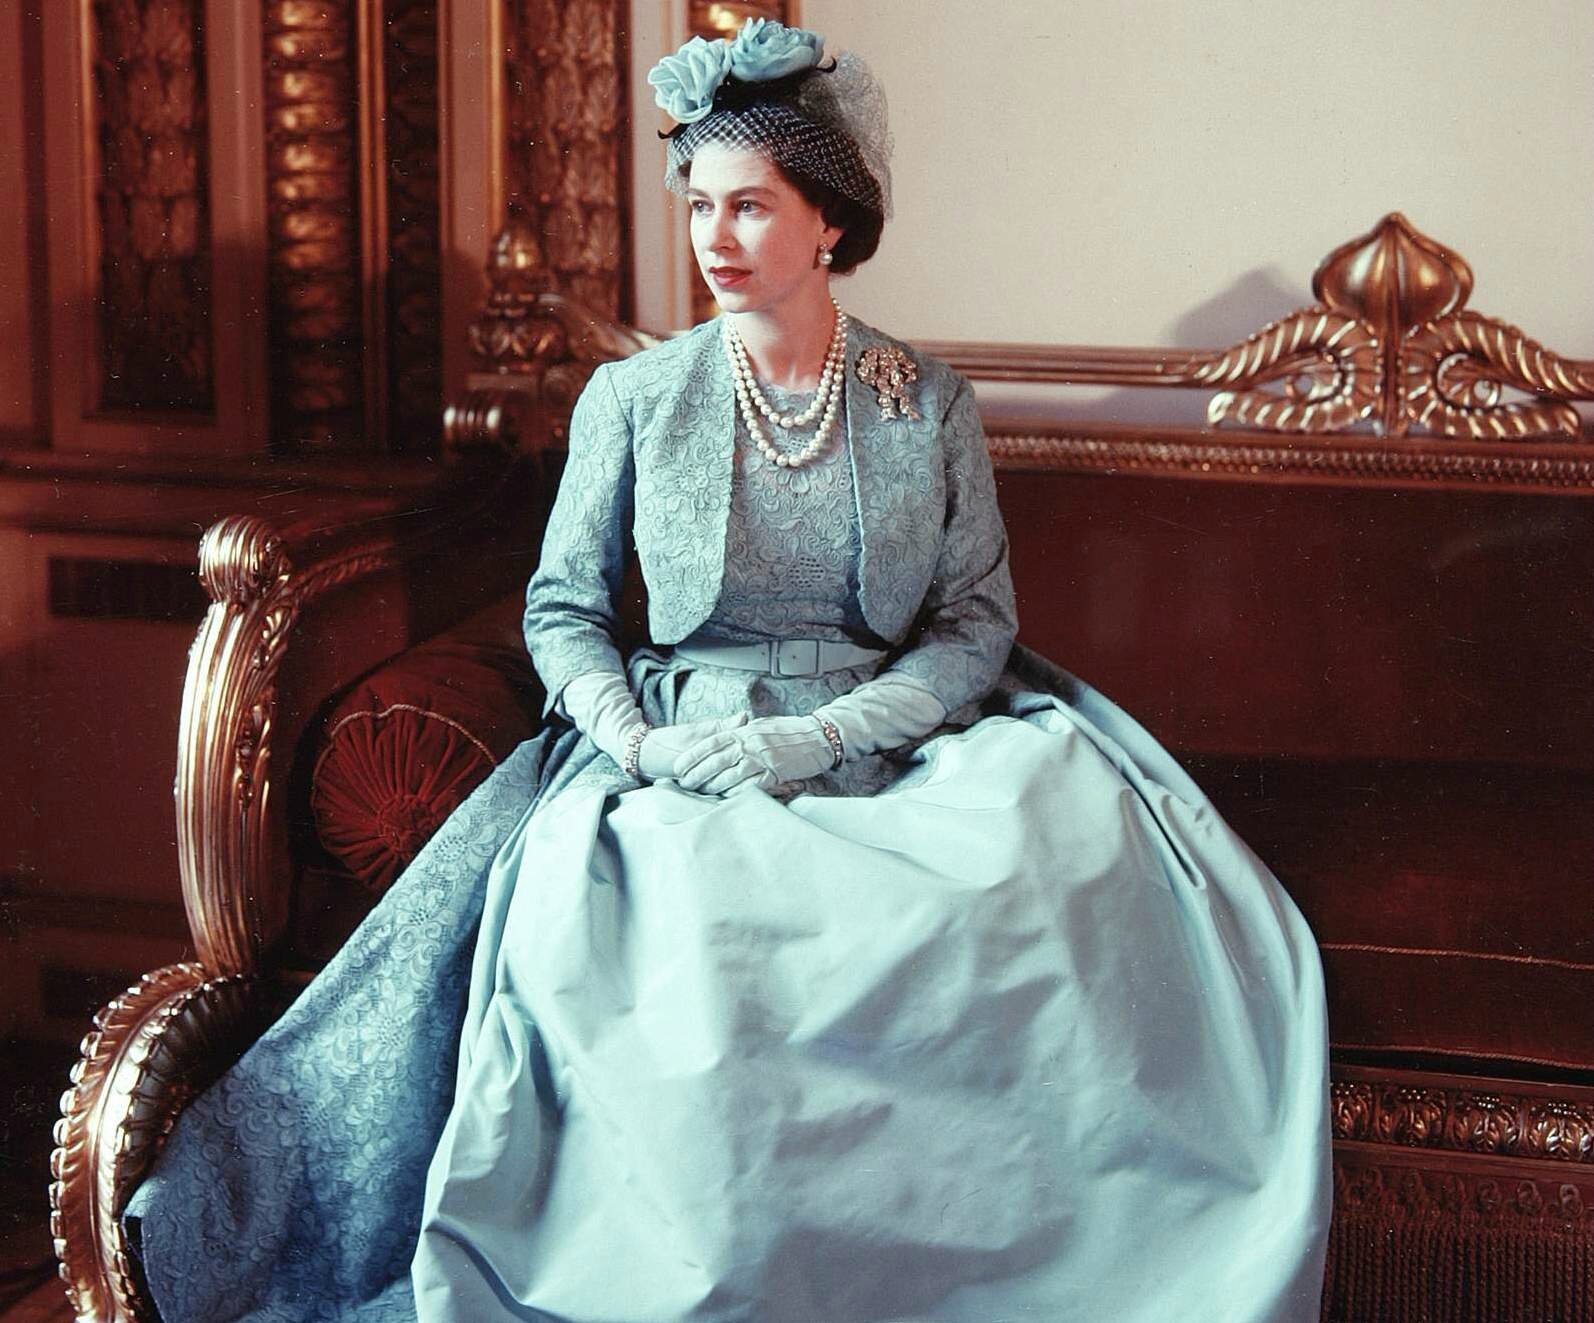 The Queen at Princess Margaret's wedding